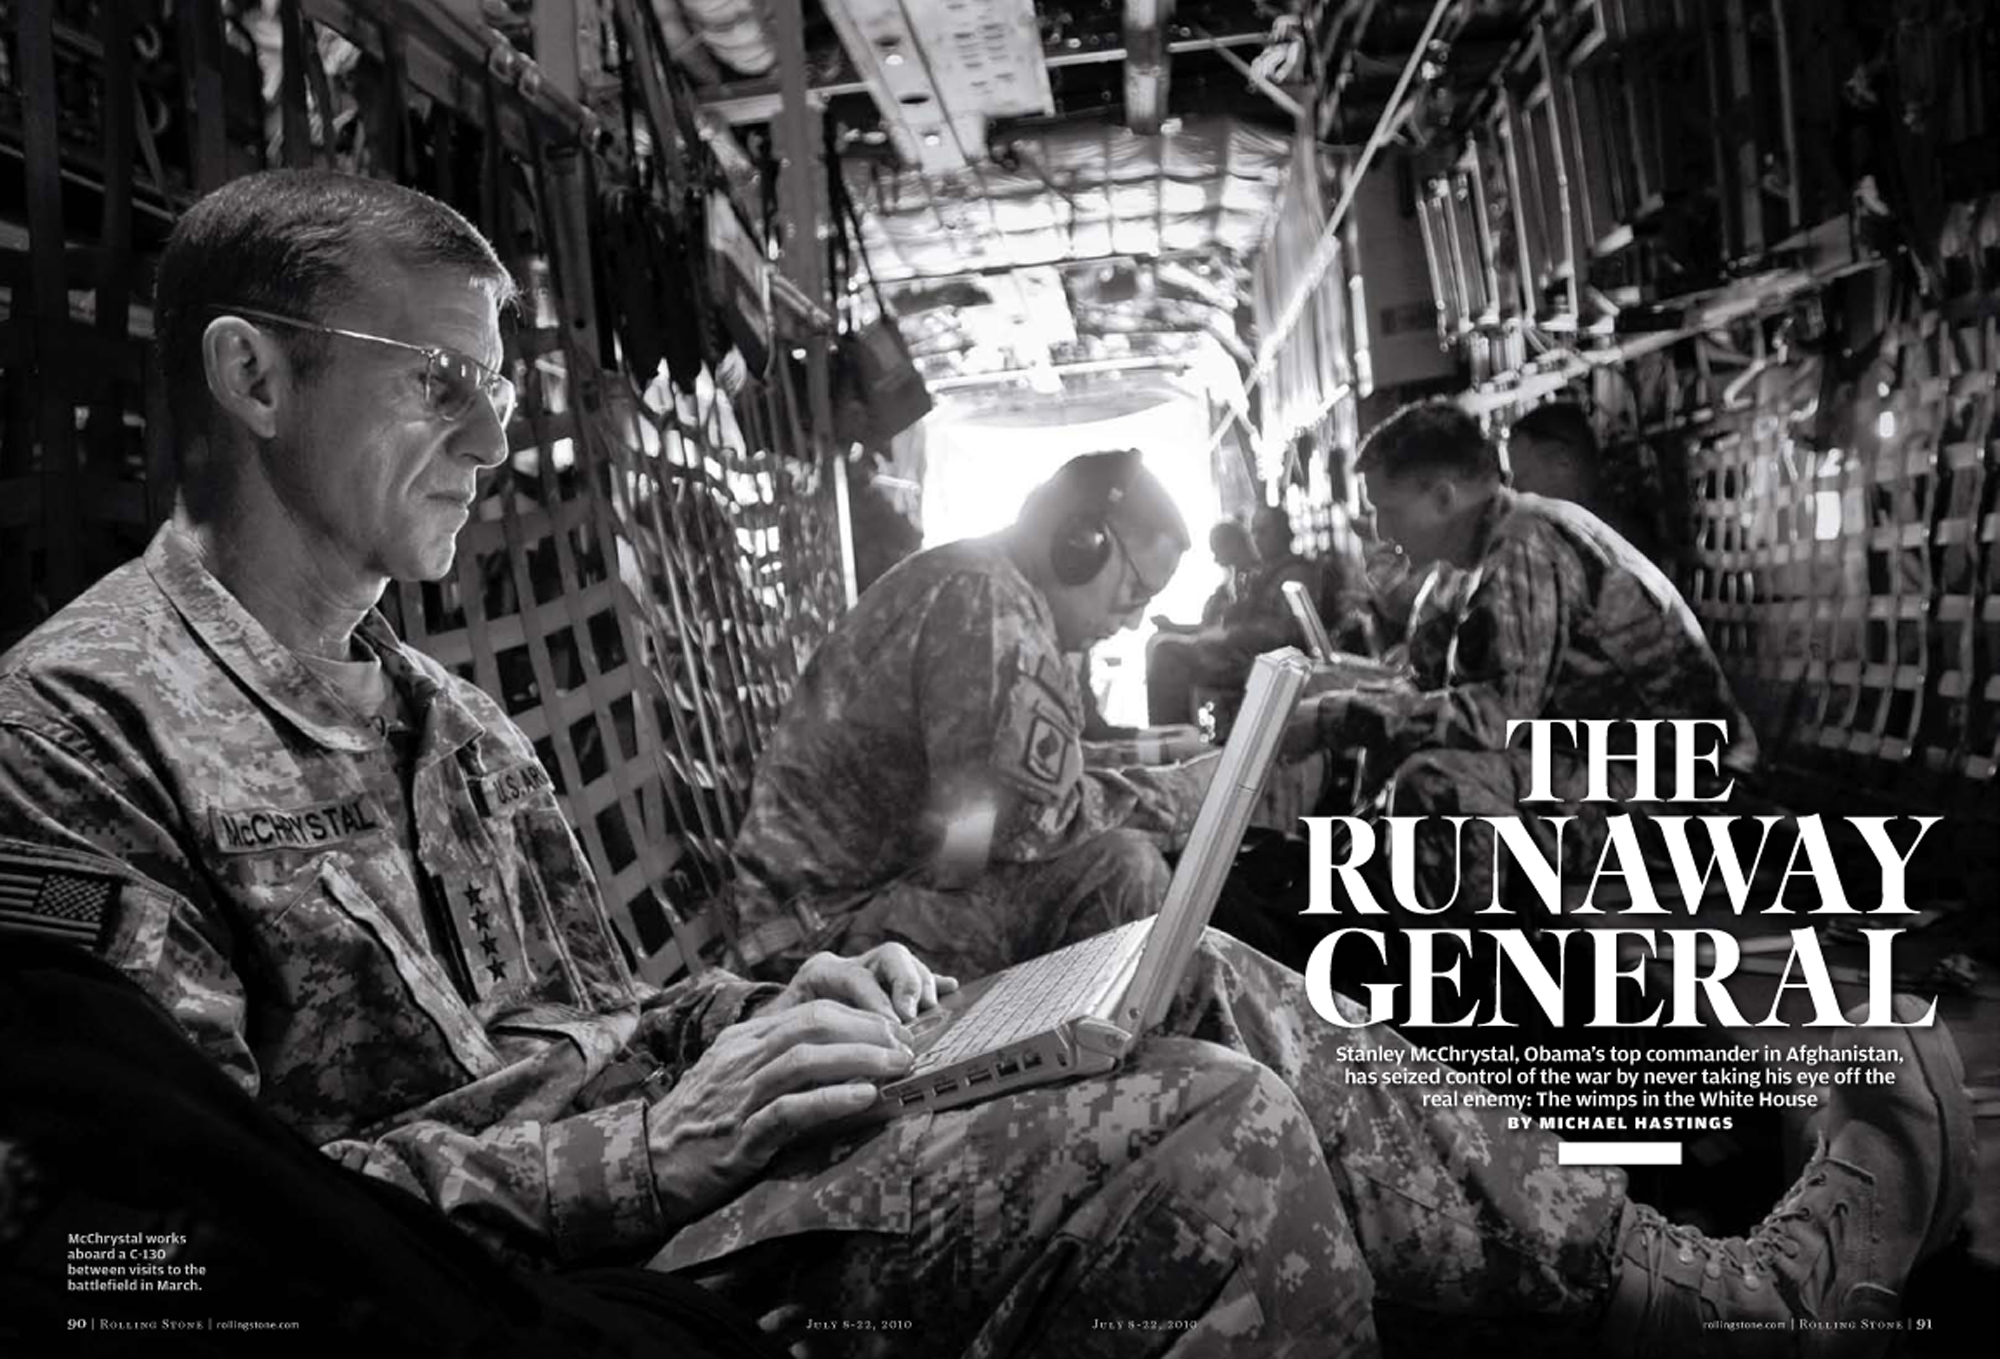 Afghanistan, Barack Obama, Stanley McChrystal, Rolling Stone